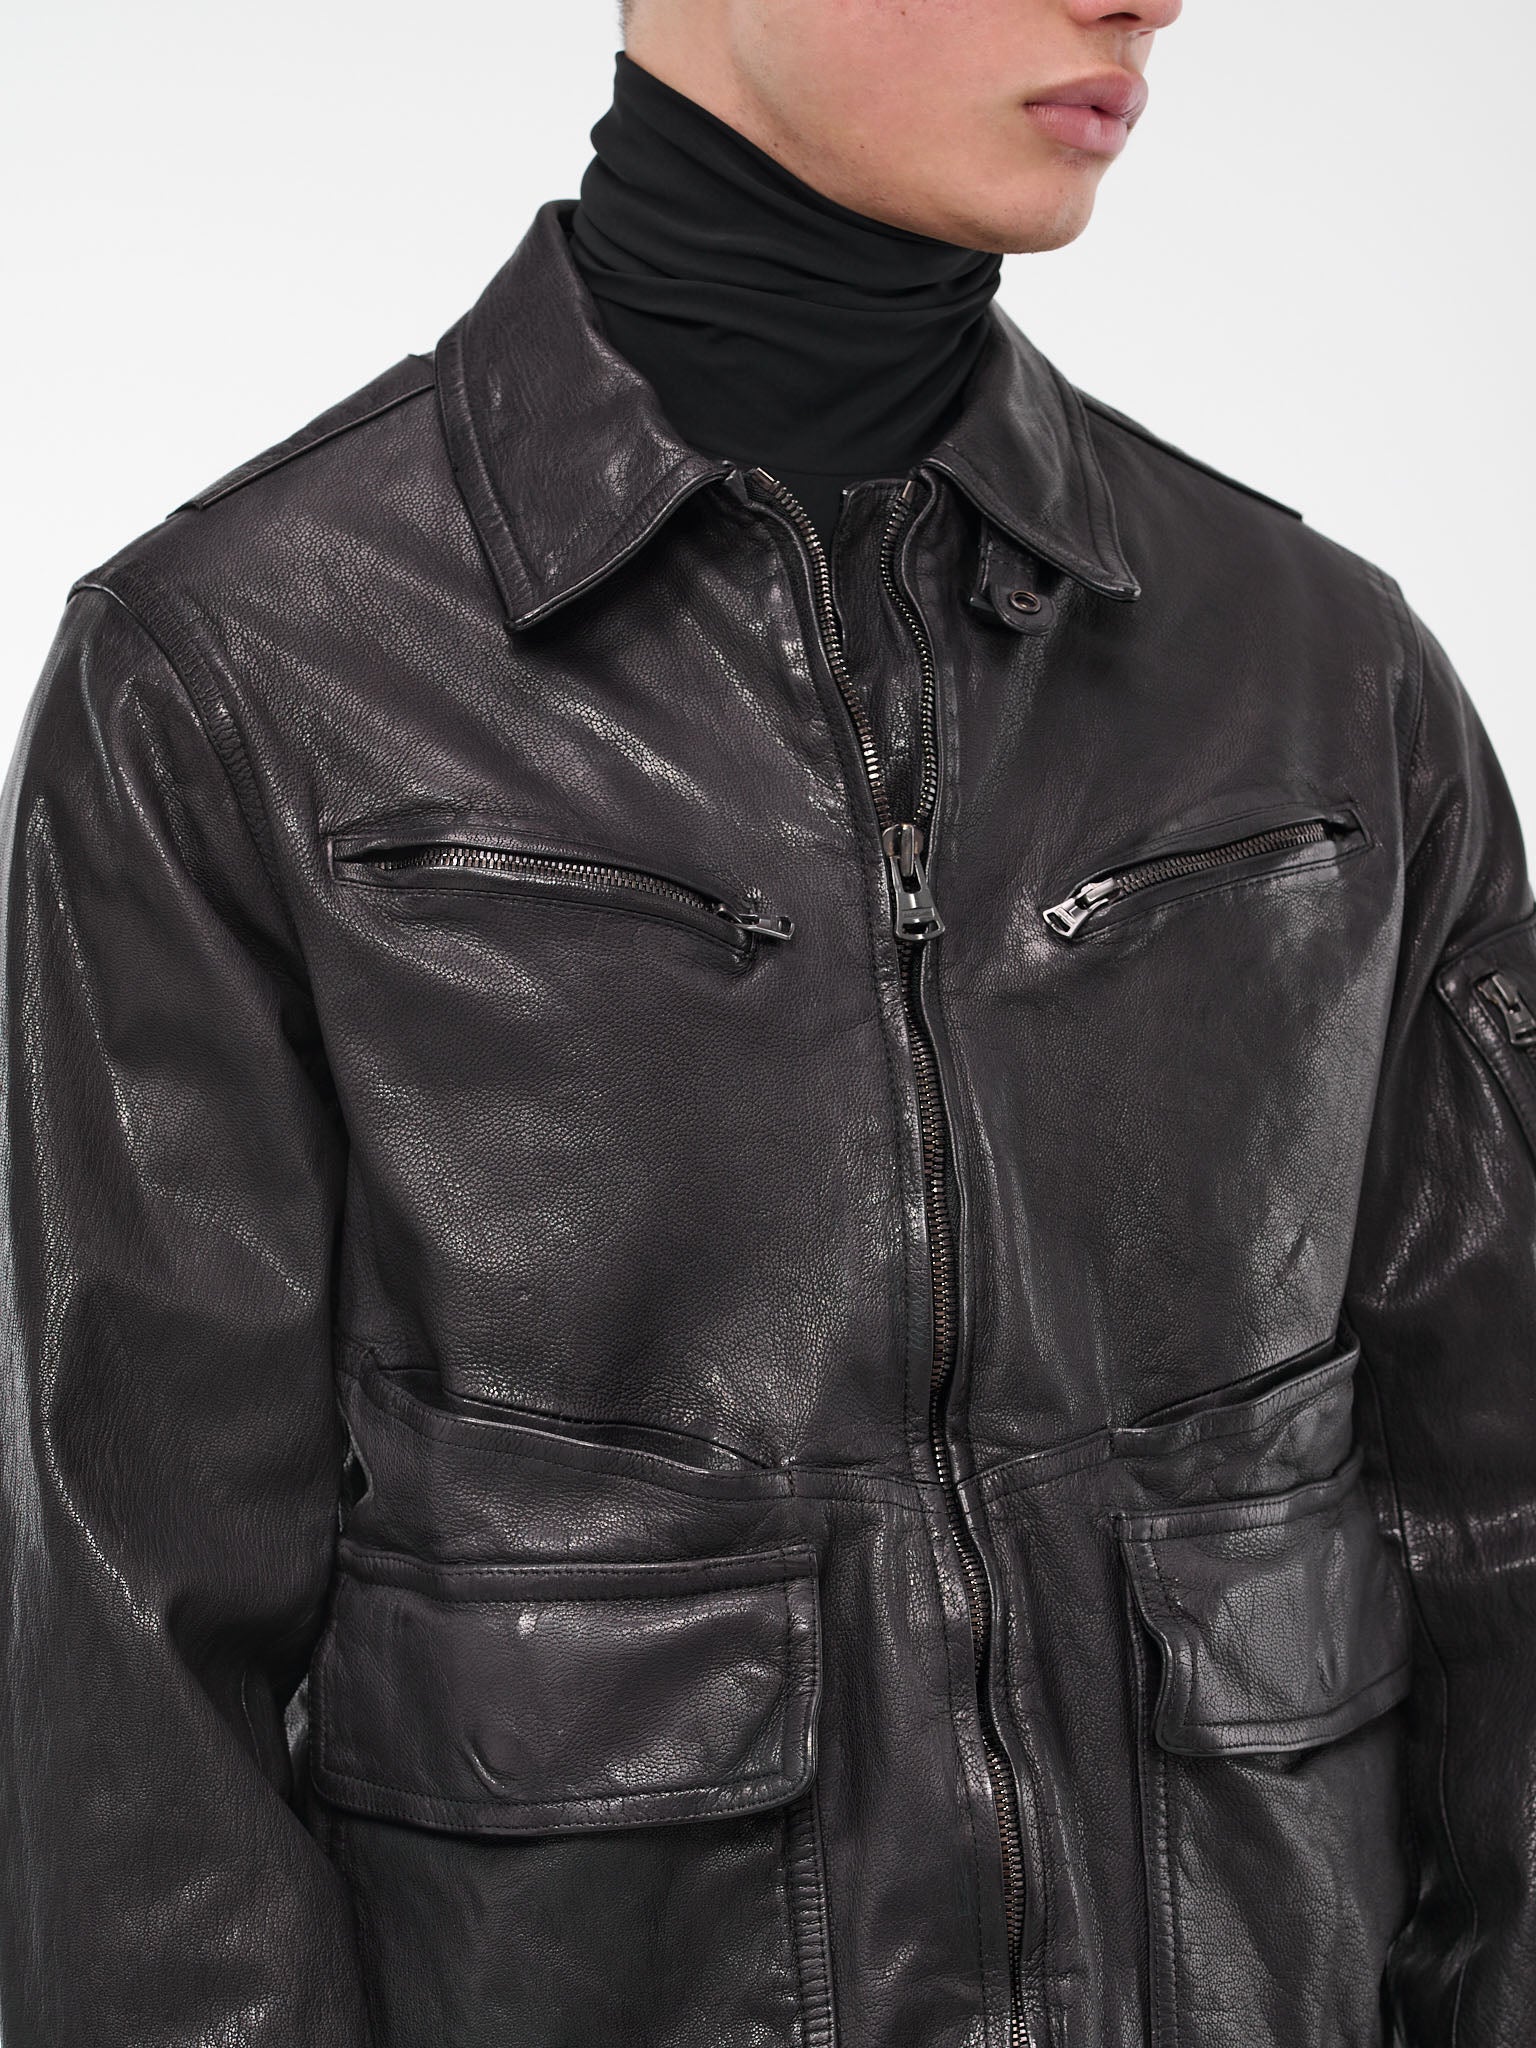 Yohji Yamamoto | H.Lorenzo|Leather Utility Jacket (HJ-Y94-703-1-BLACK), 3 / Black